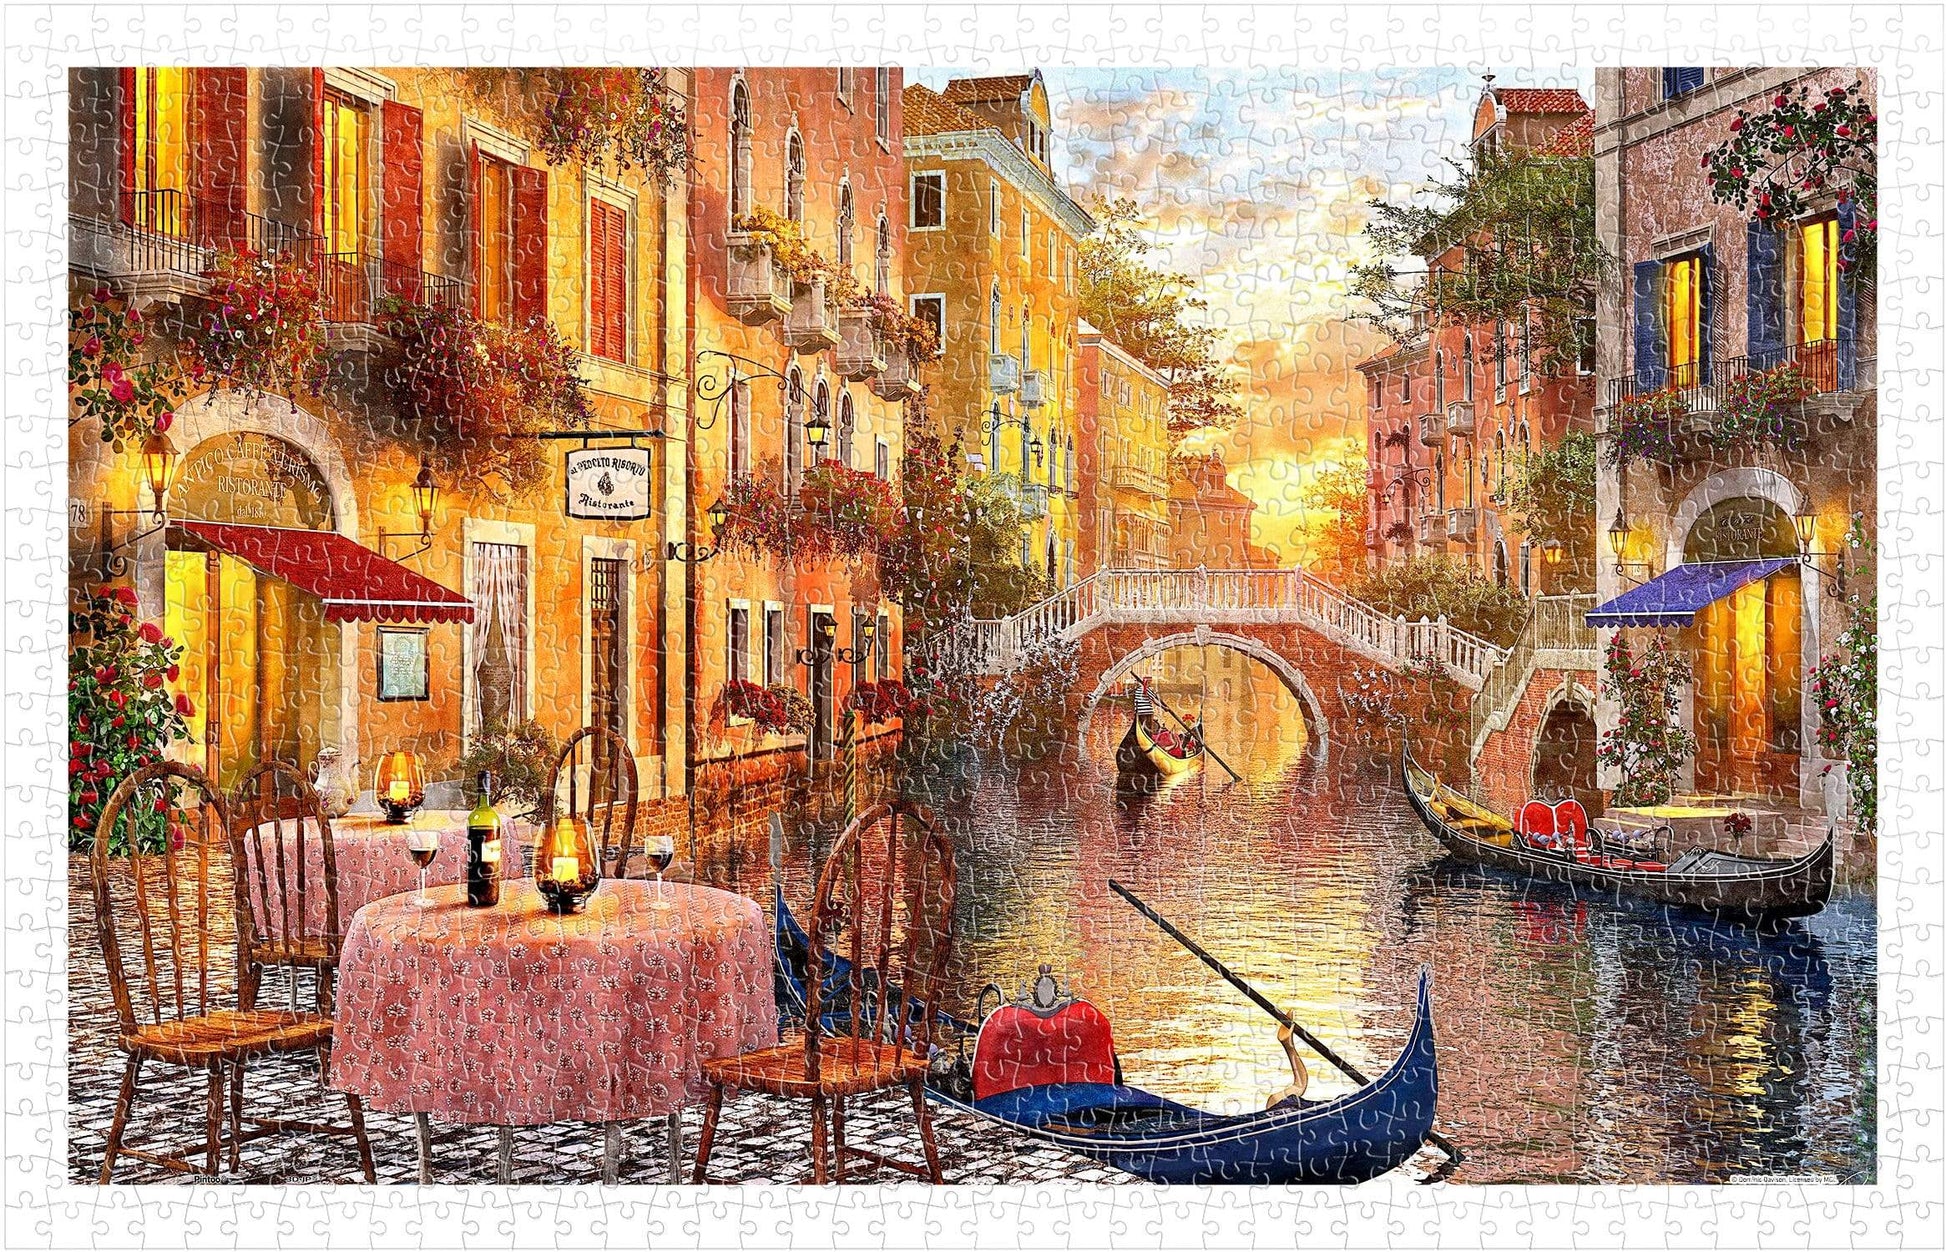 Venetian Sunset - 1000 Piece Jigsaw Puzzle